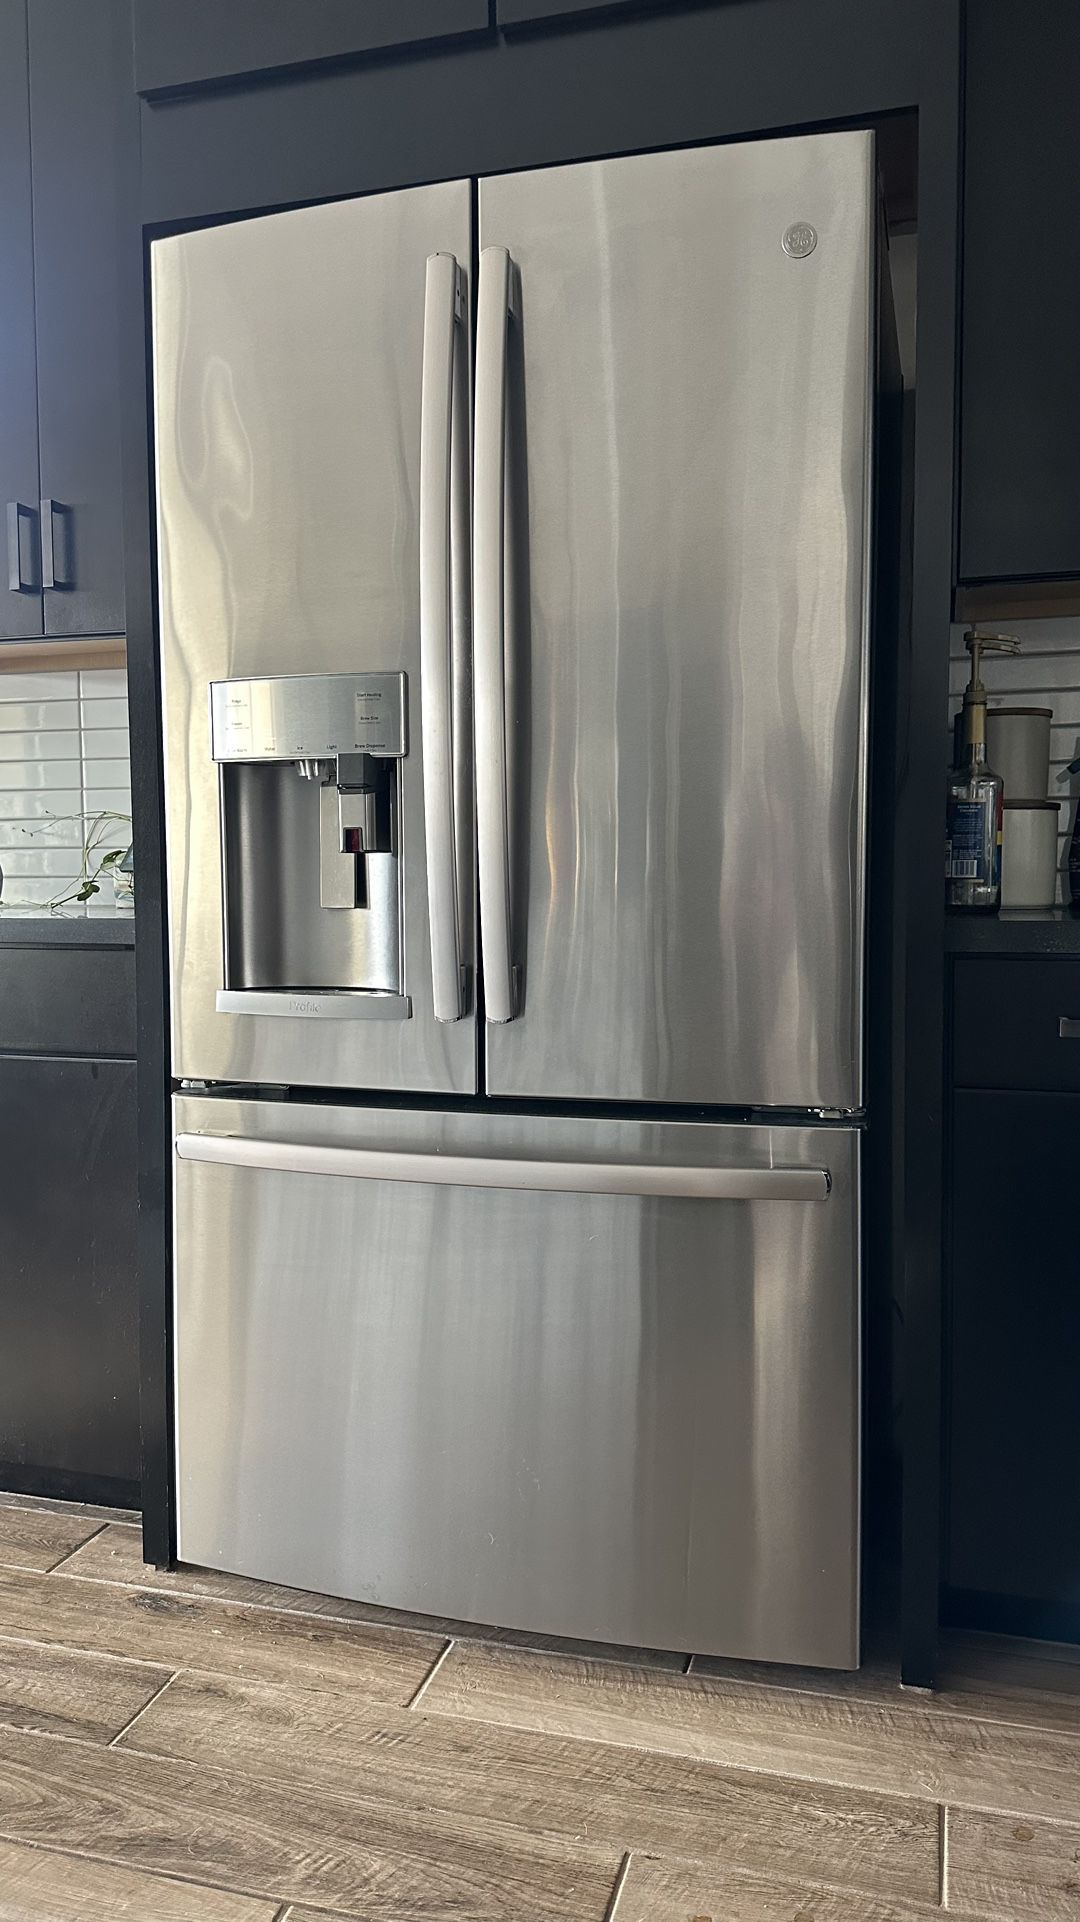 GE Profile Counter Depth Refrigerator